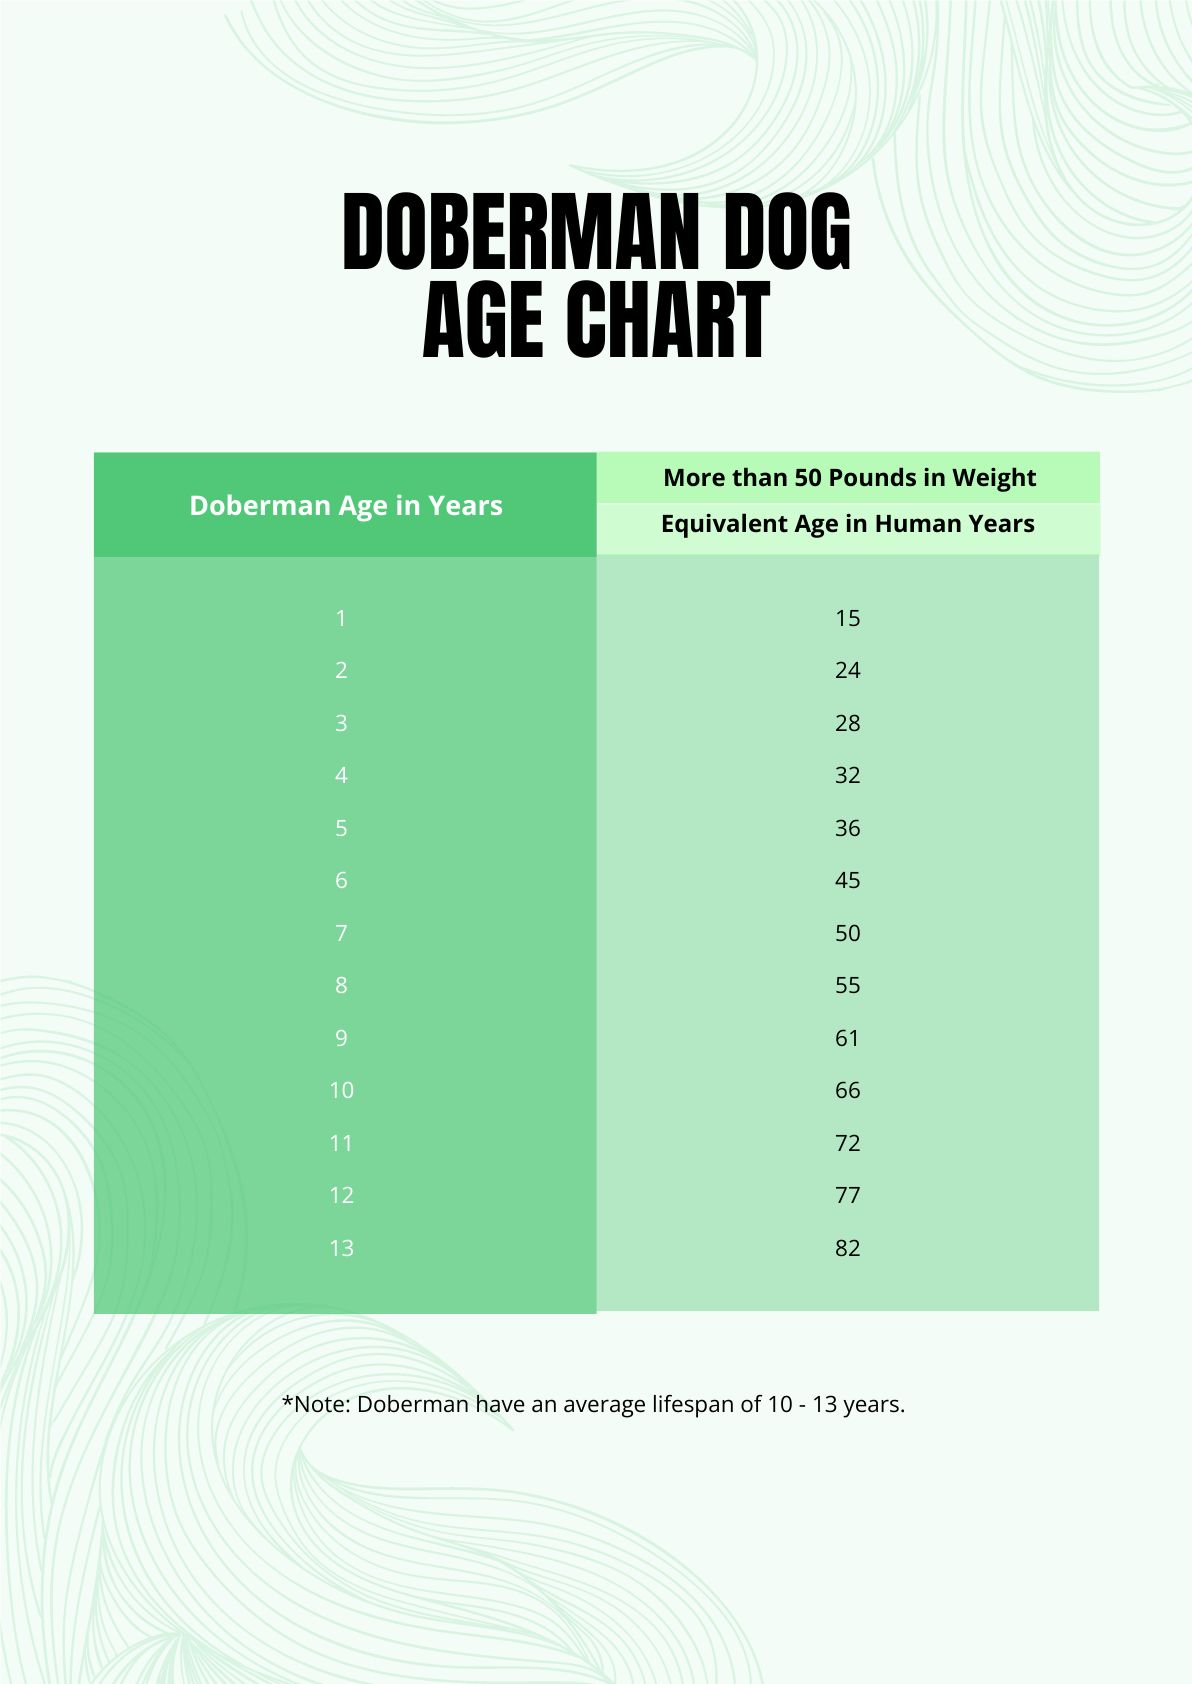 Doberman Dog Age Chart in PDF